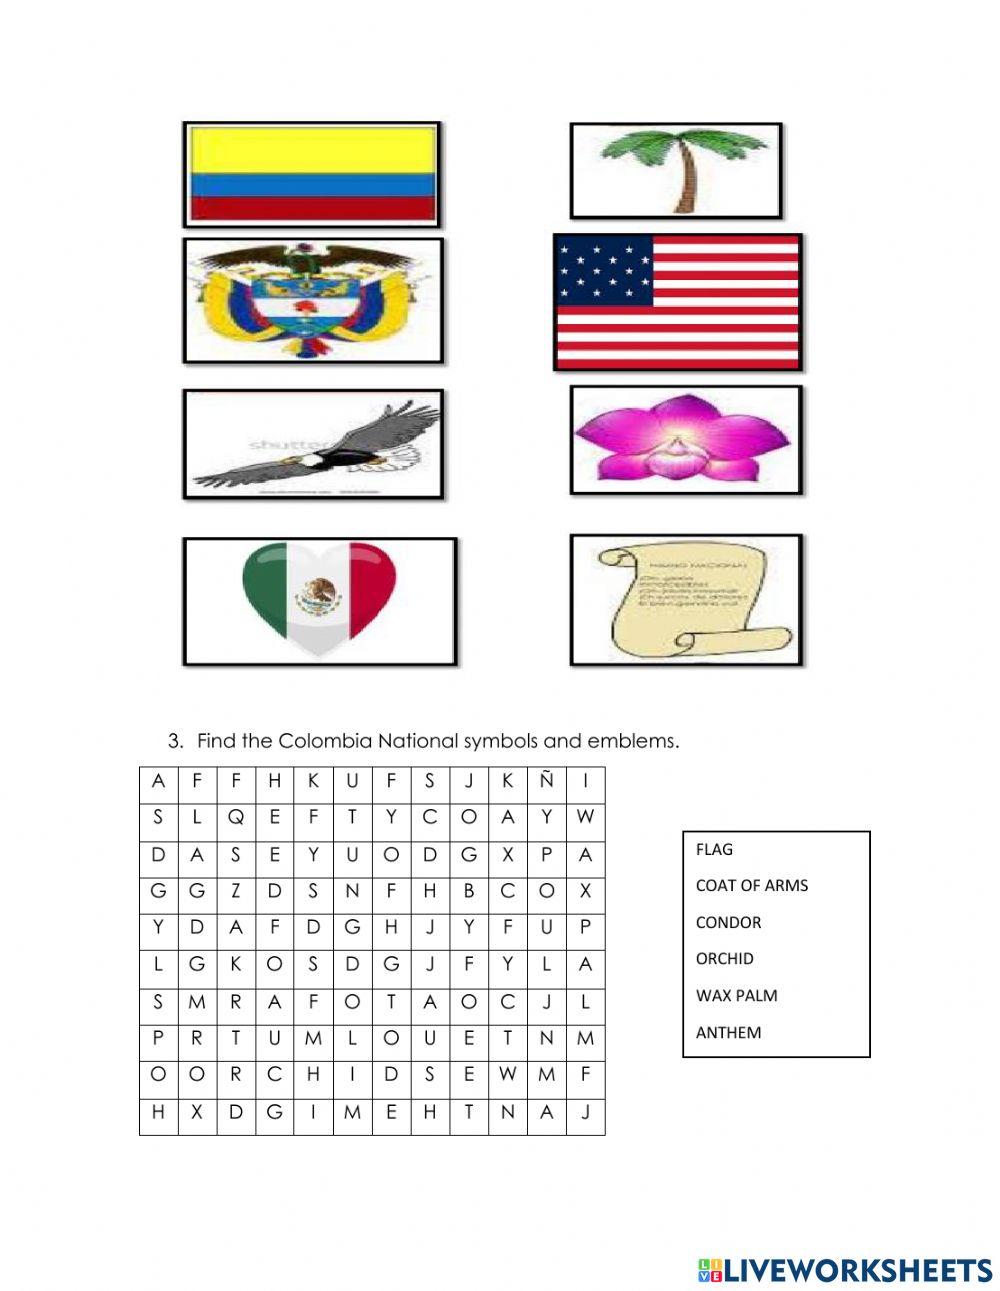 Colombian symbols